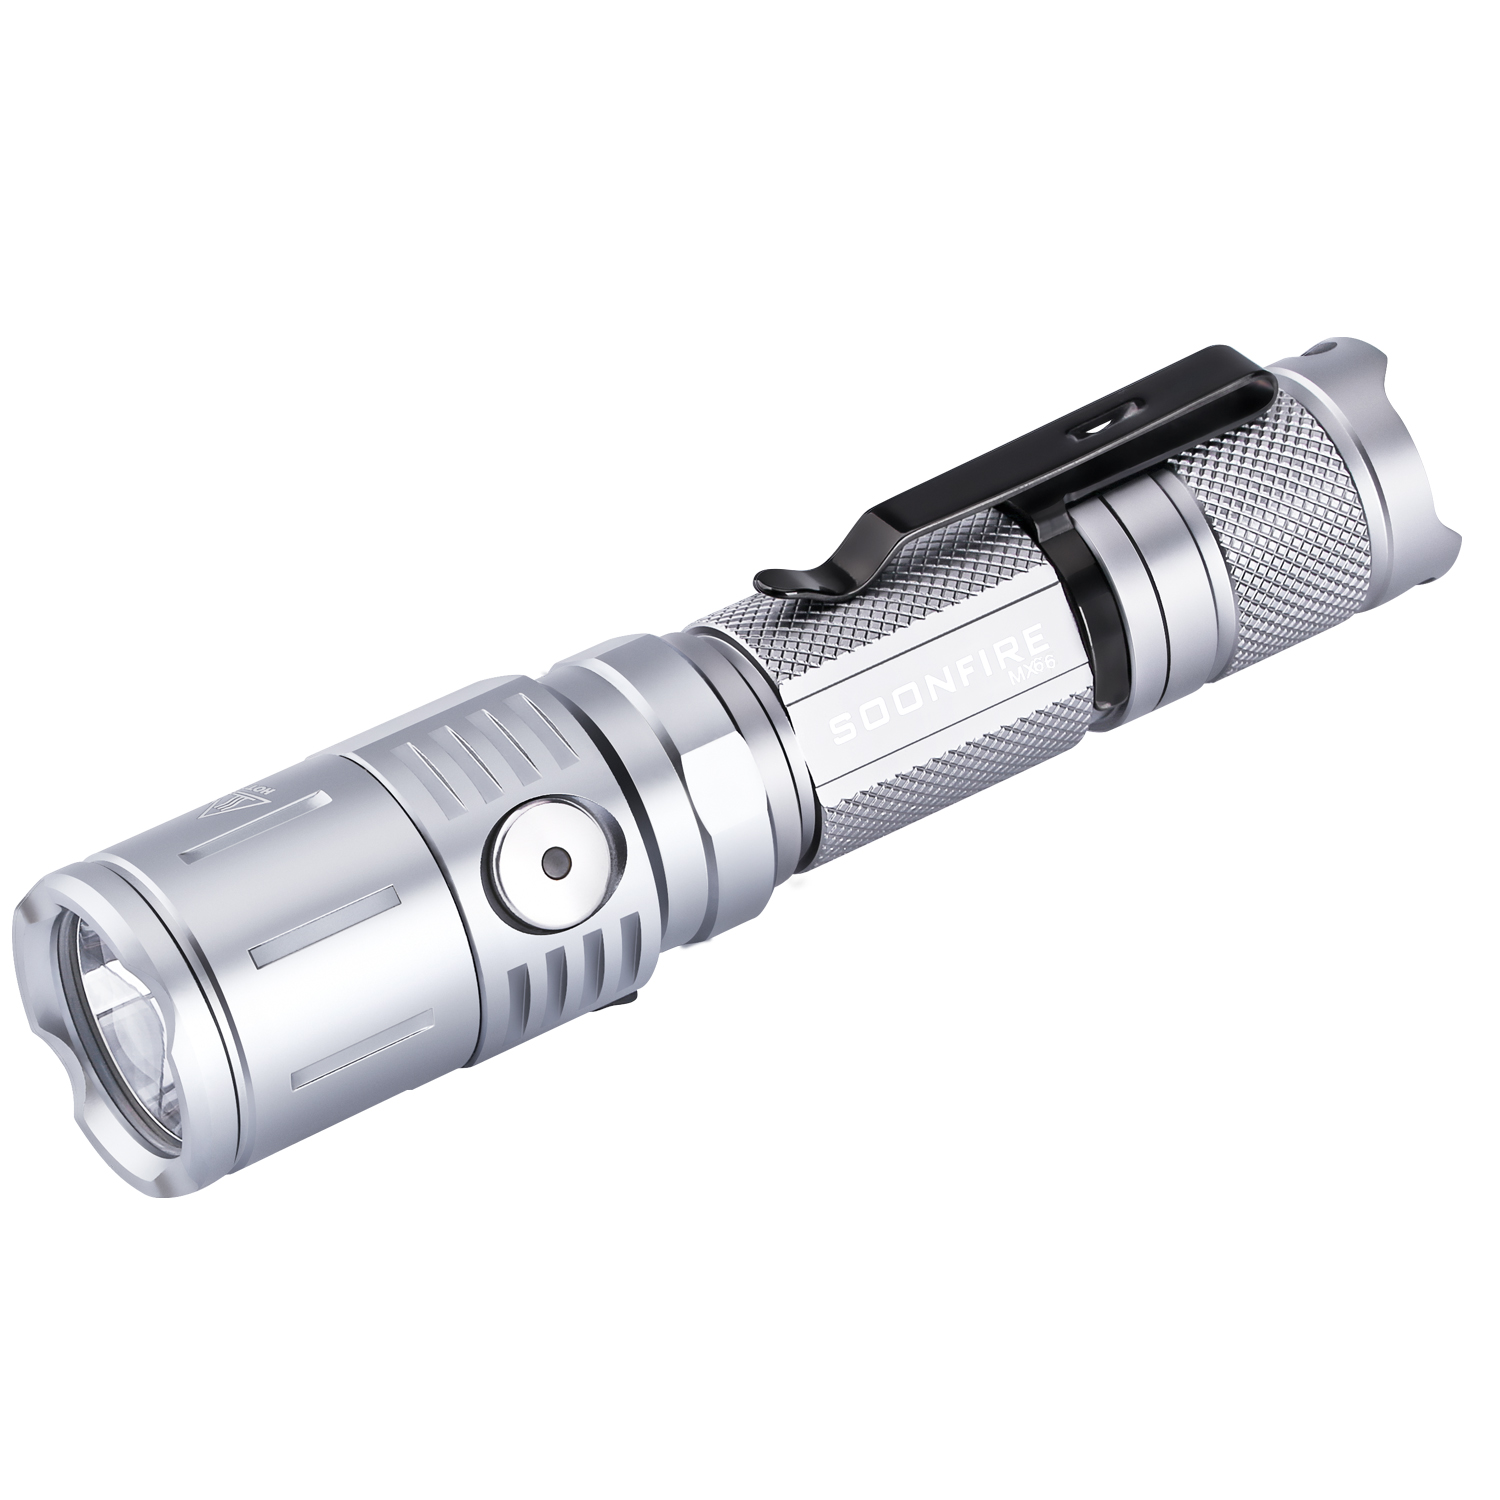 Soonfire MX Series Cree LED Tactical Flashlight(Grey)